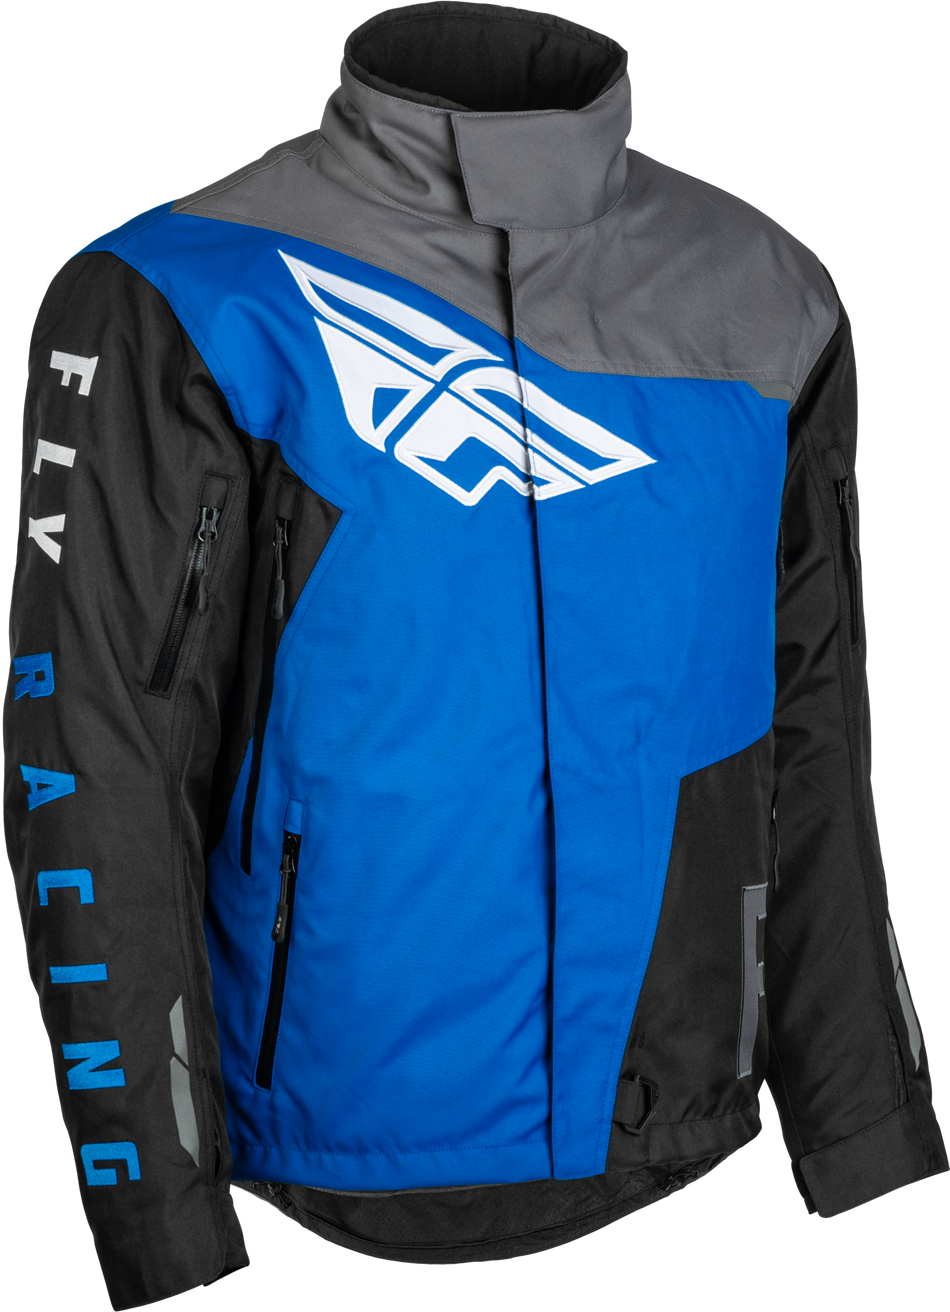 FLY RACING Snx Pro Jacket Black/Grey/Blue Md 470-4116M